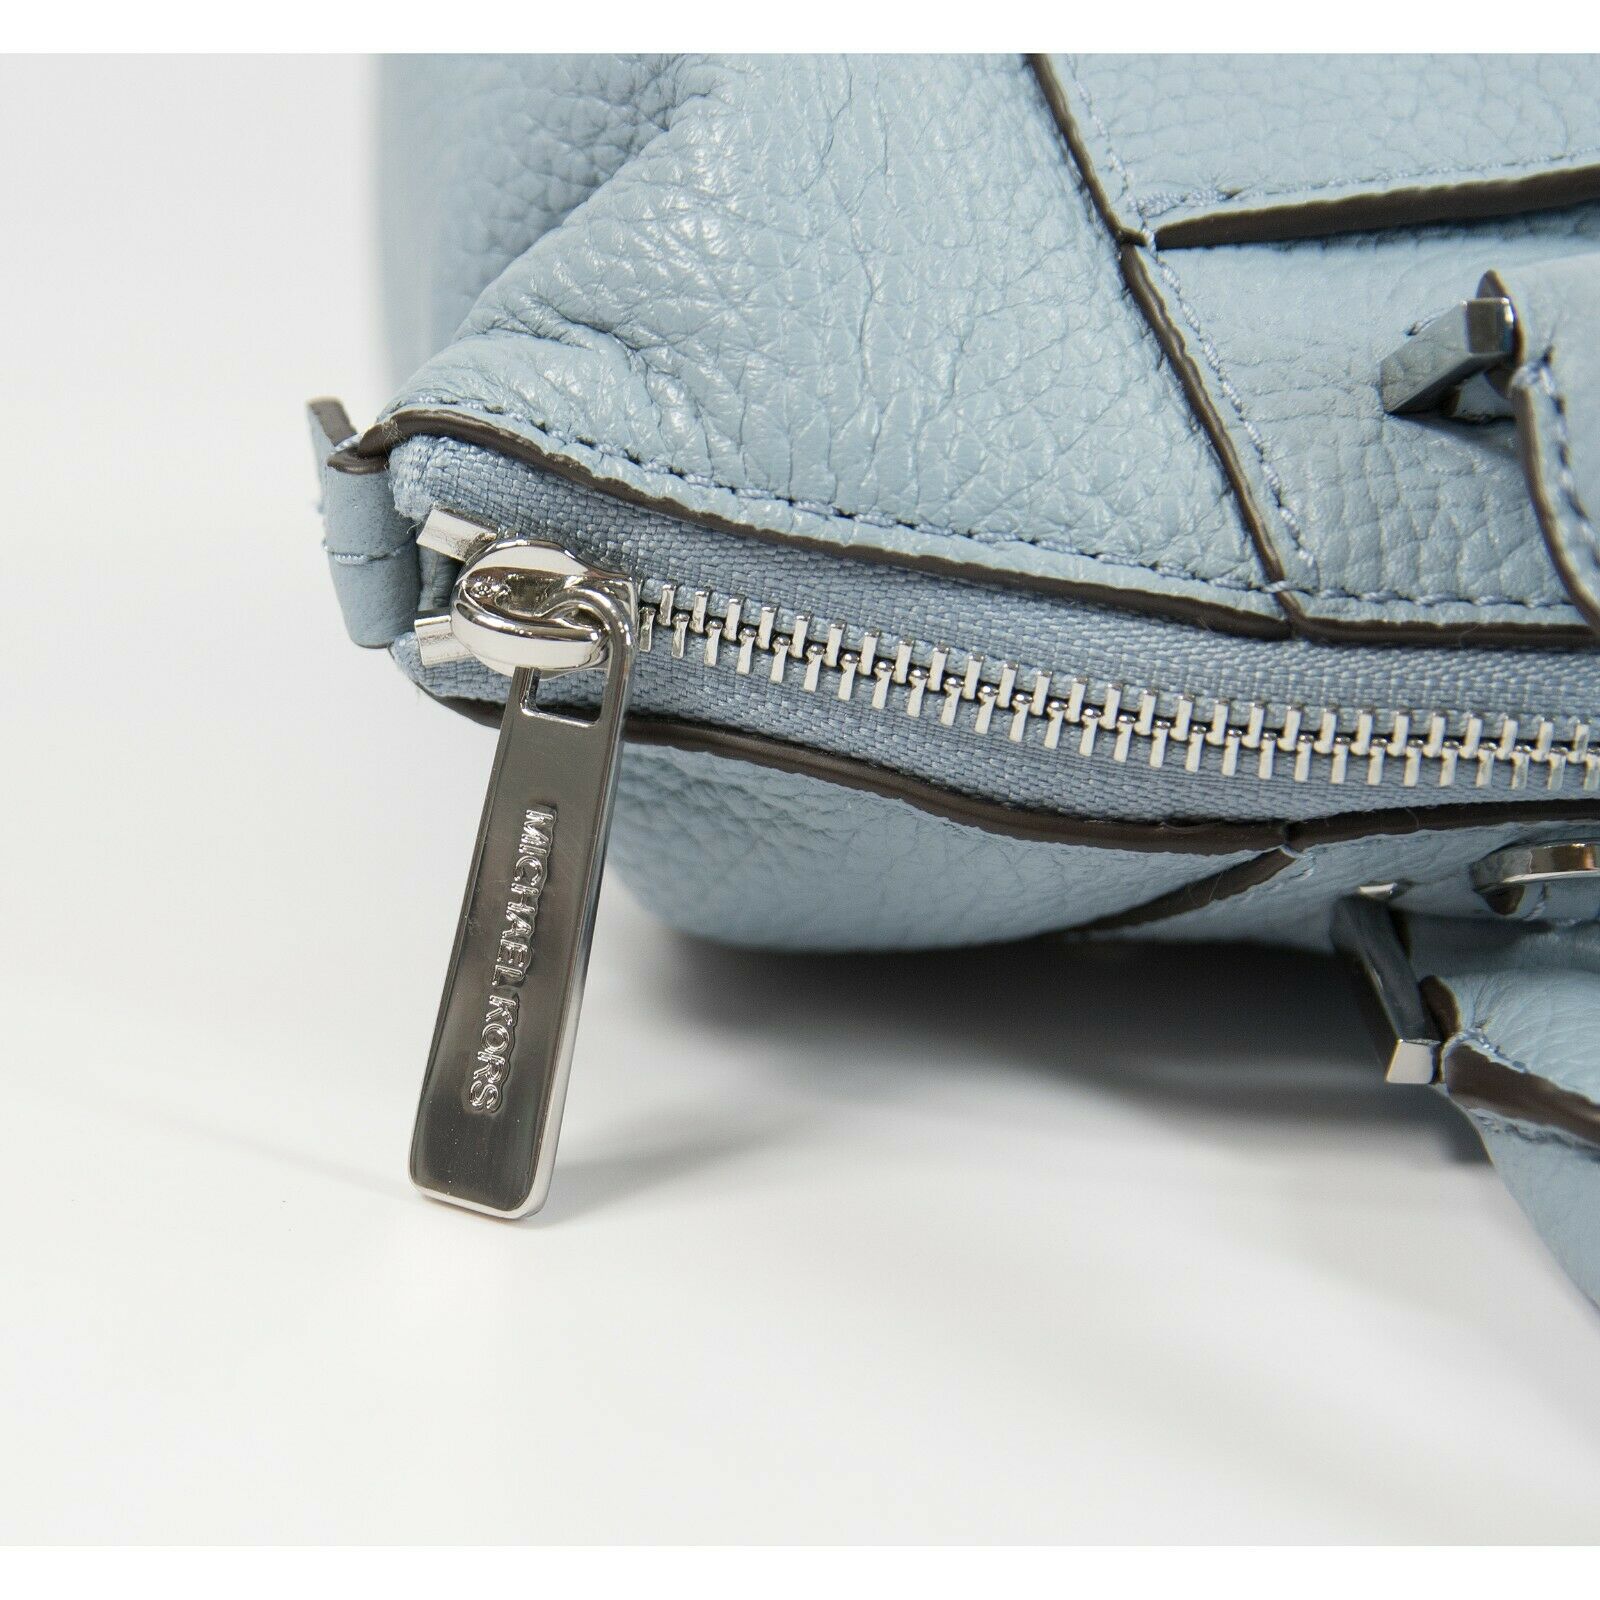 Michael Kors Large Riley Handbag Light Blue Pebble Leather $348